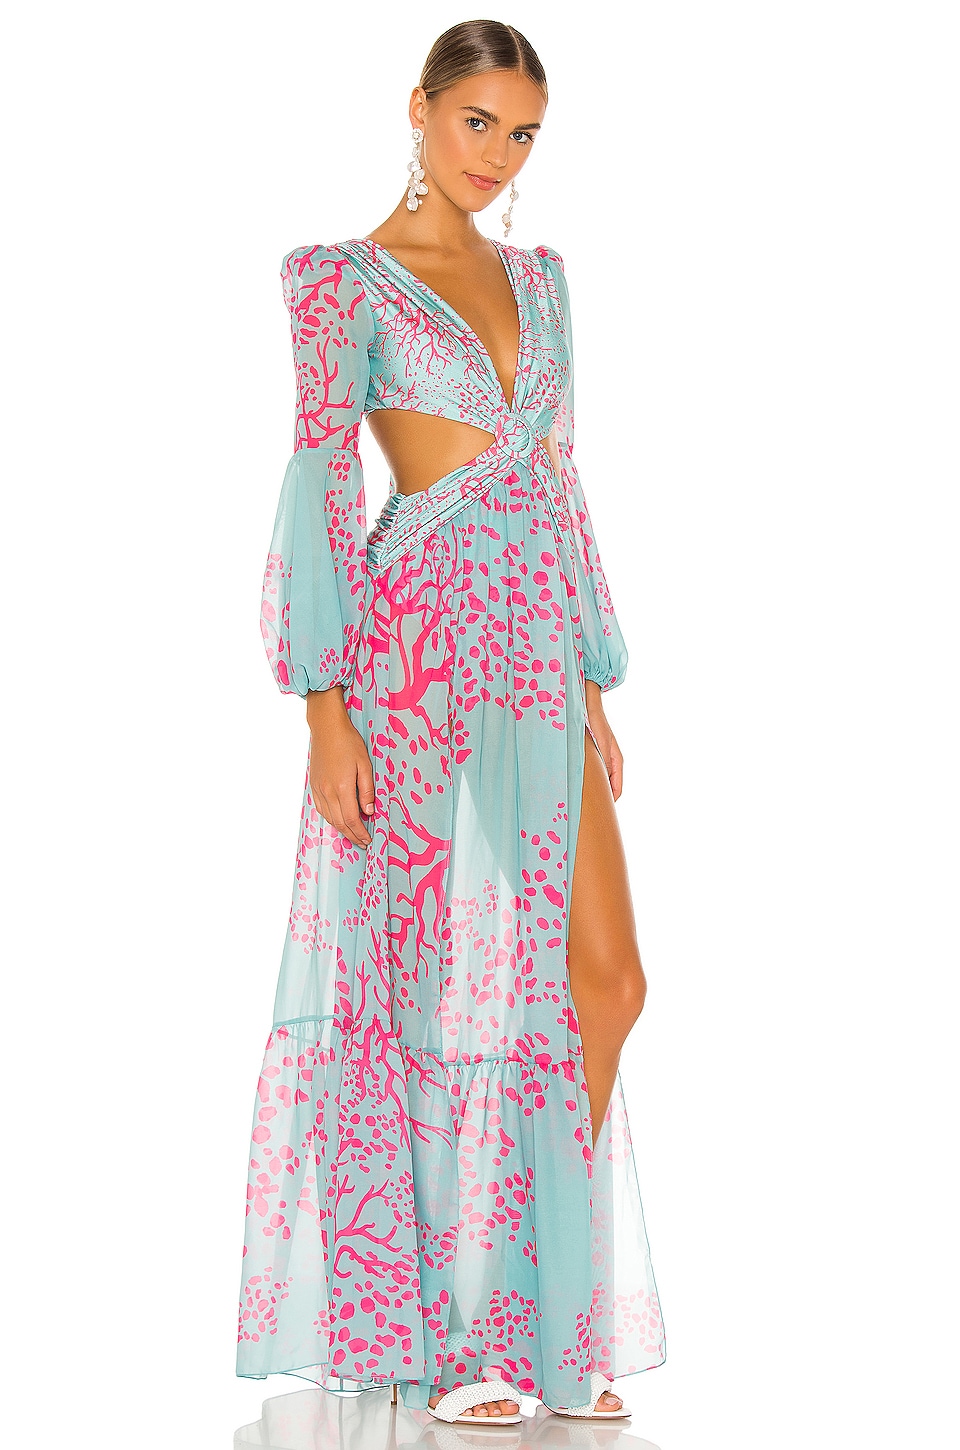 PatBO Coral Print Long Sleeve Beach Dress in Aqua | REVOLVE